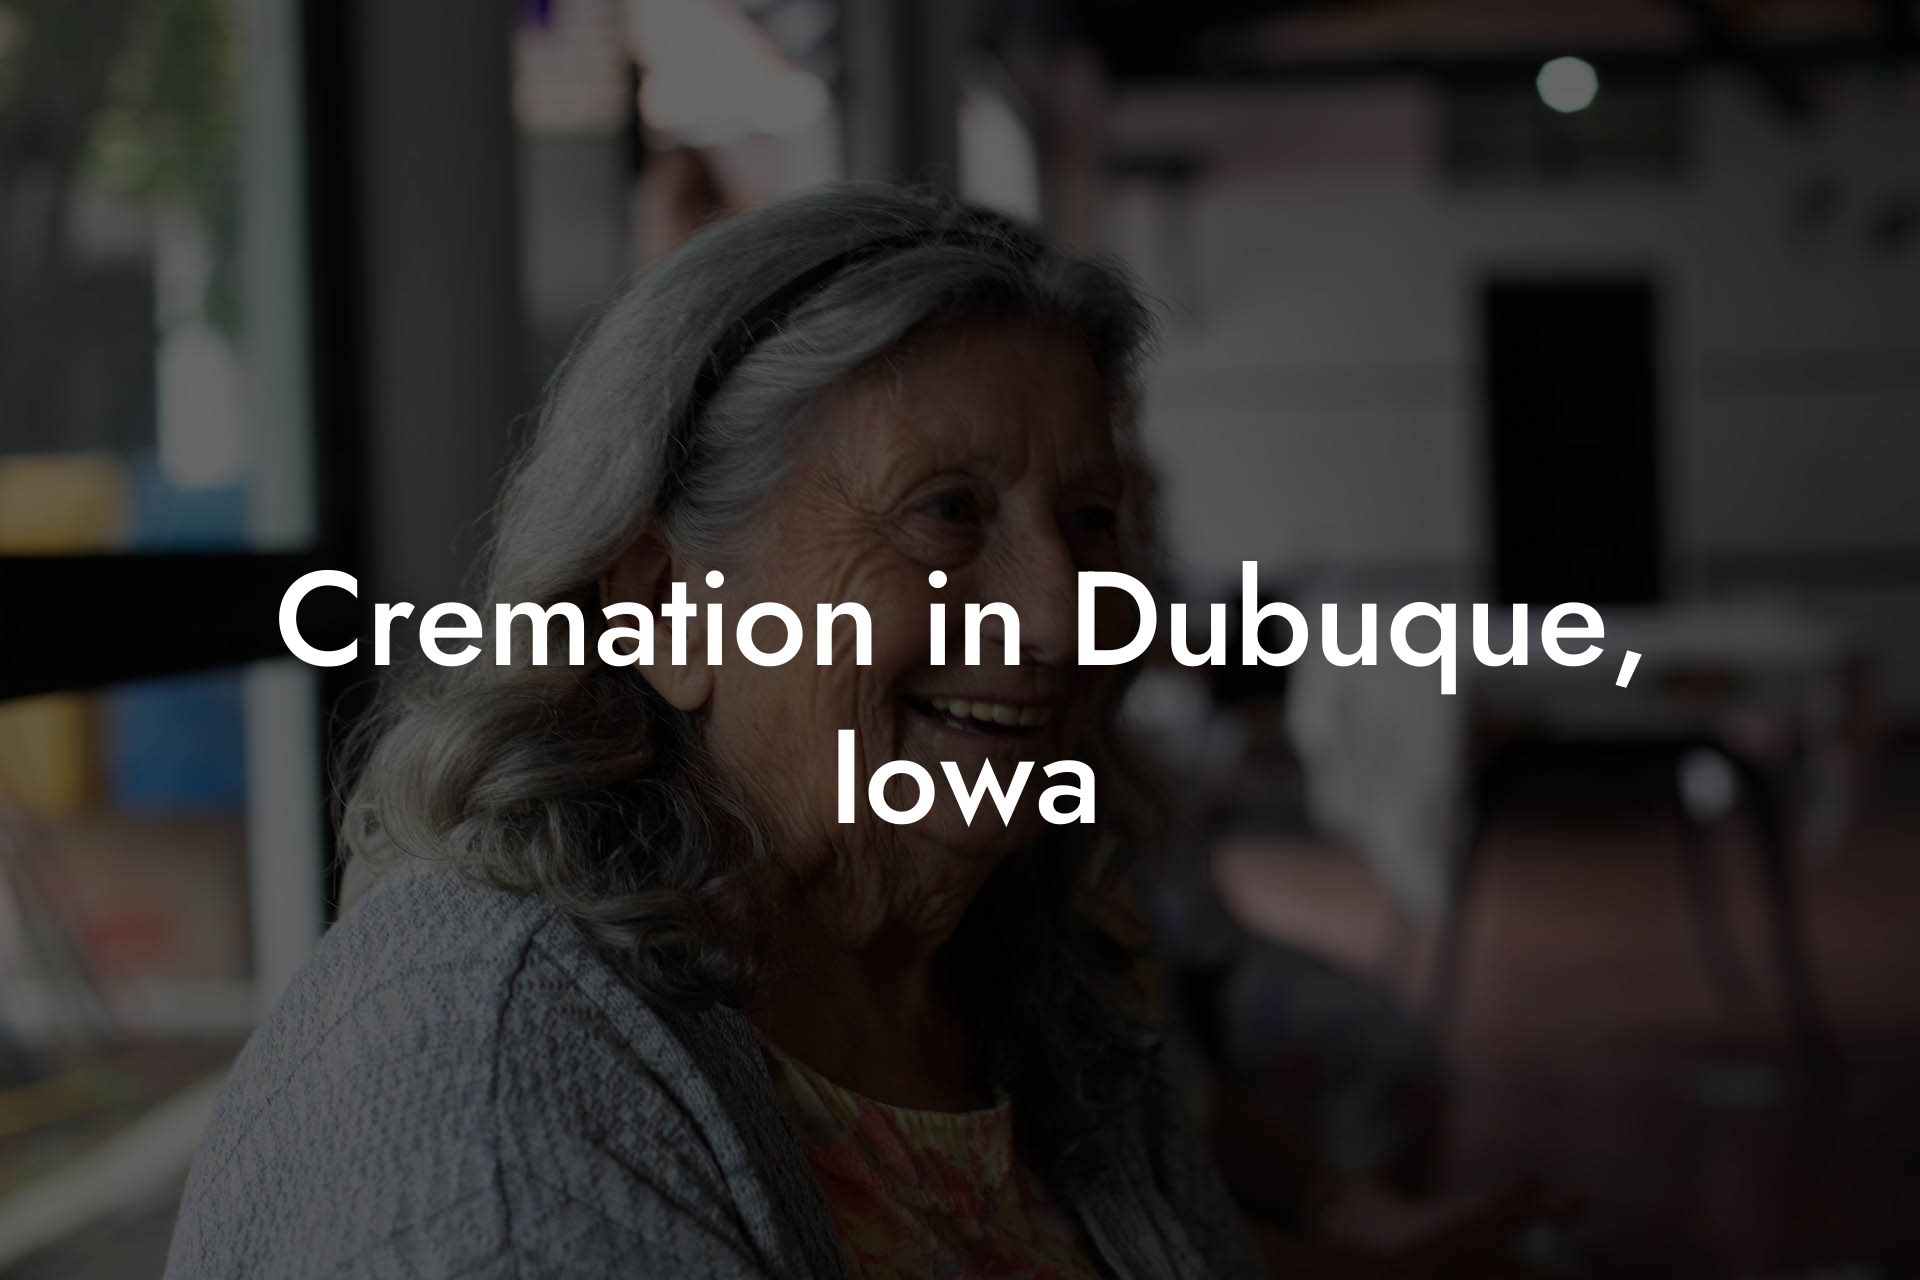 Cremation in Dubuque, Iowa